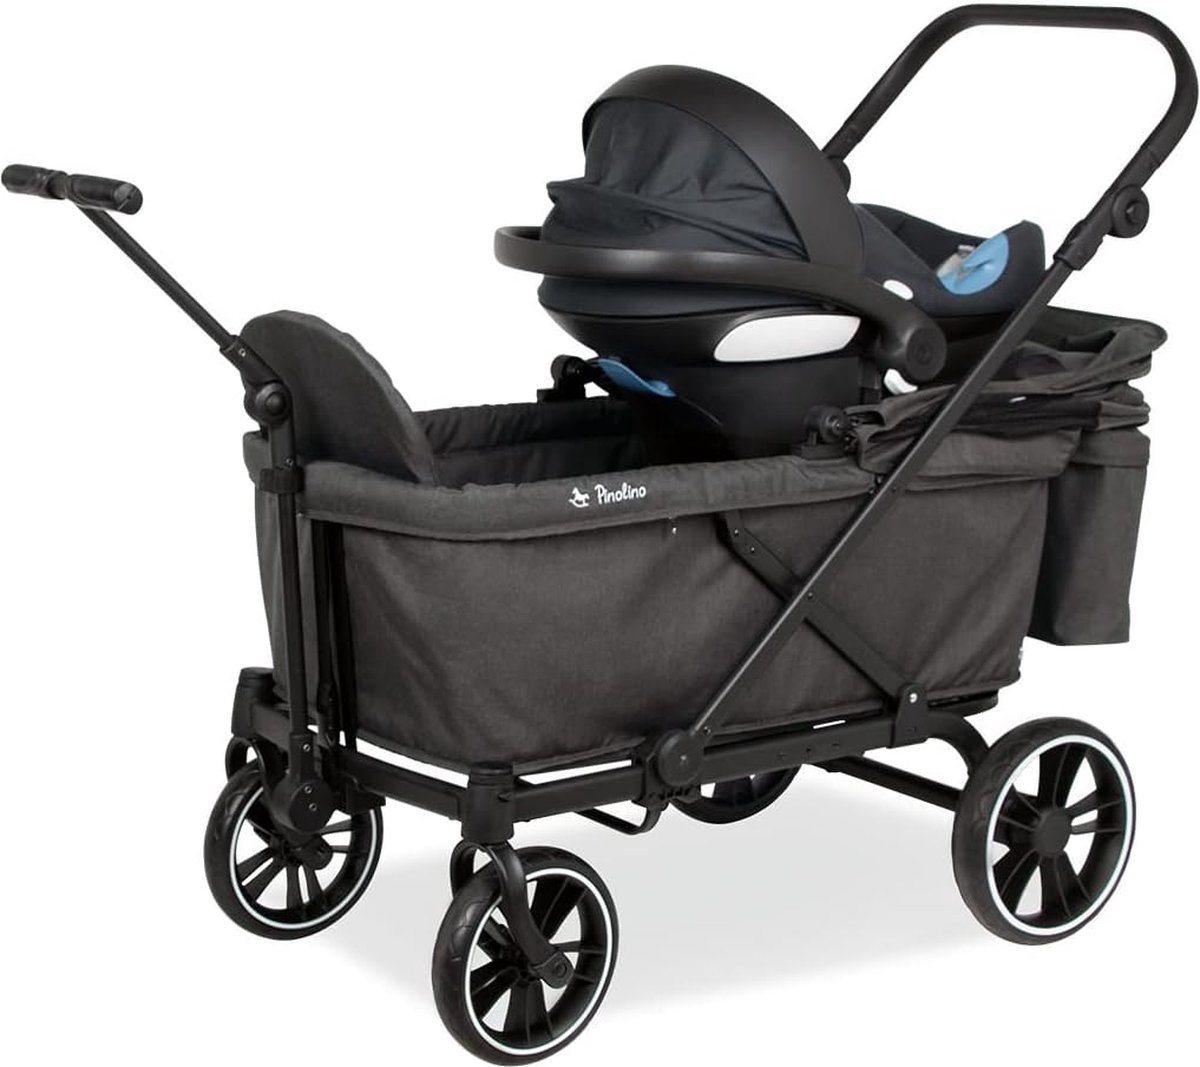 Baby seat adapter for folding handcart 'Cruiser'